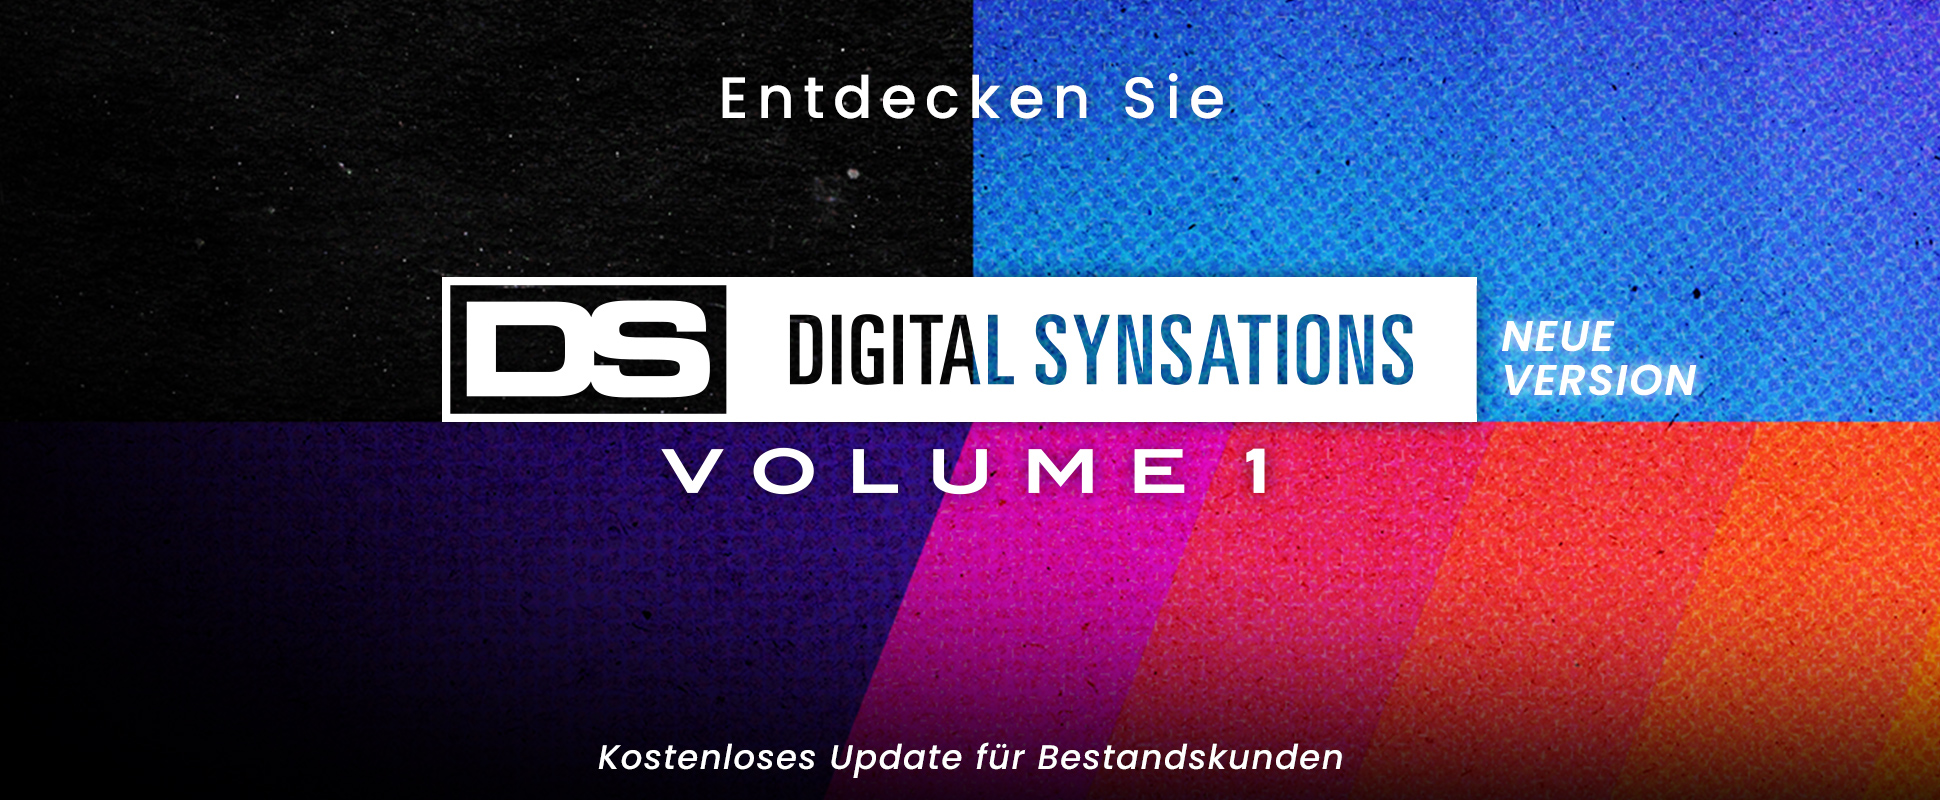 Digital Synsations Vol.1 - New